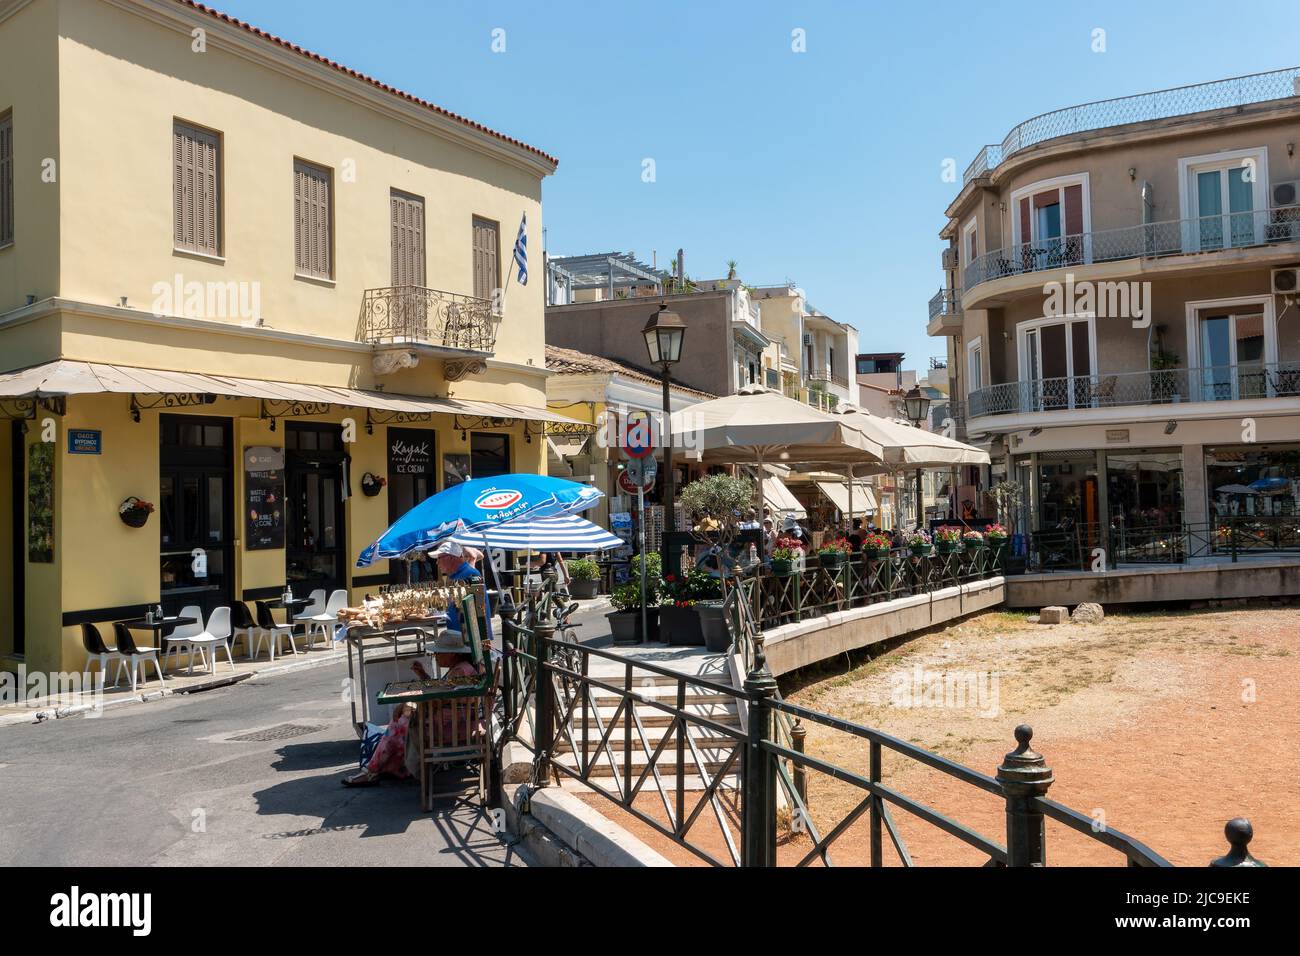 The Plaka area of Athens, Greece Stock Photo